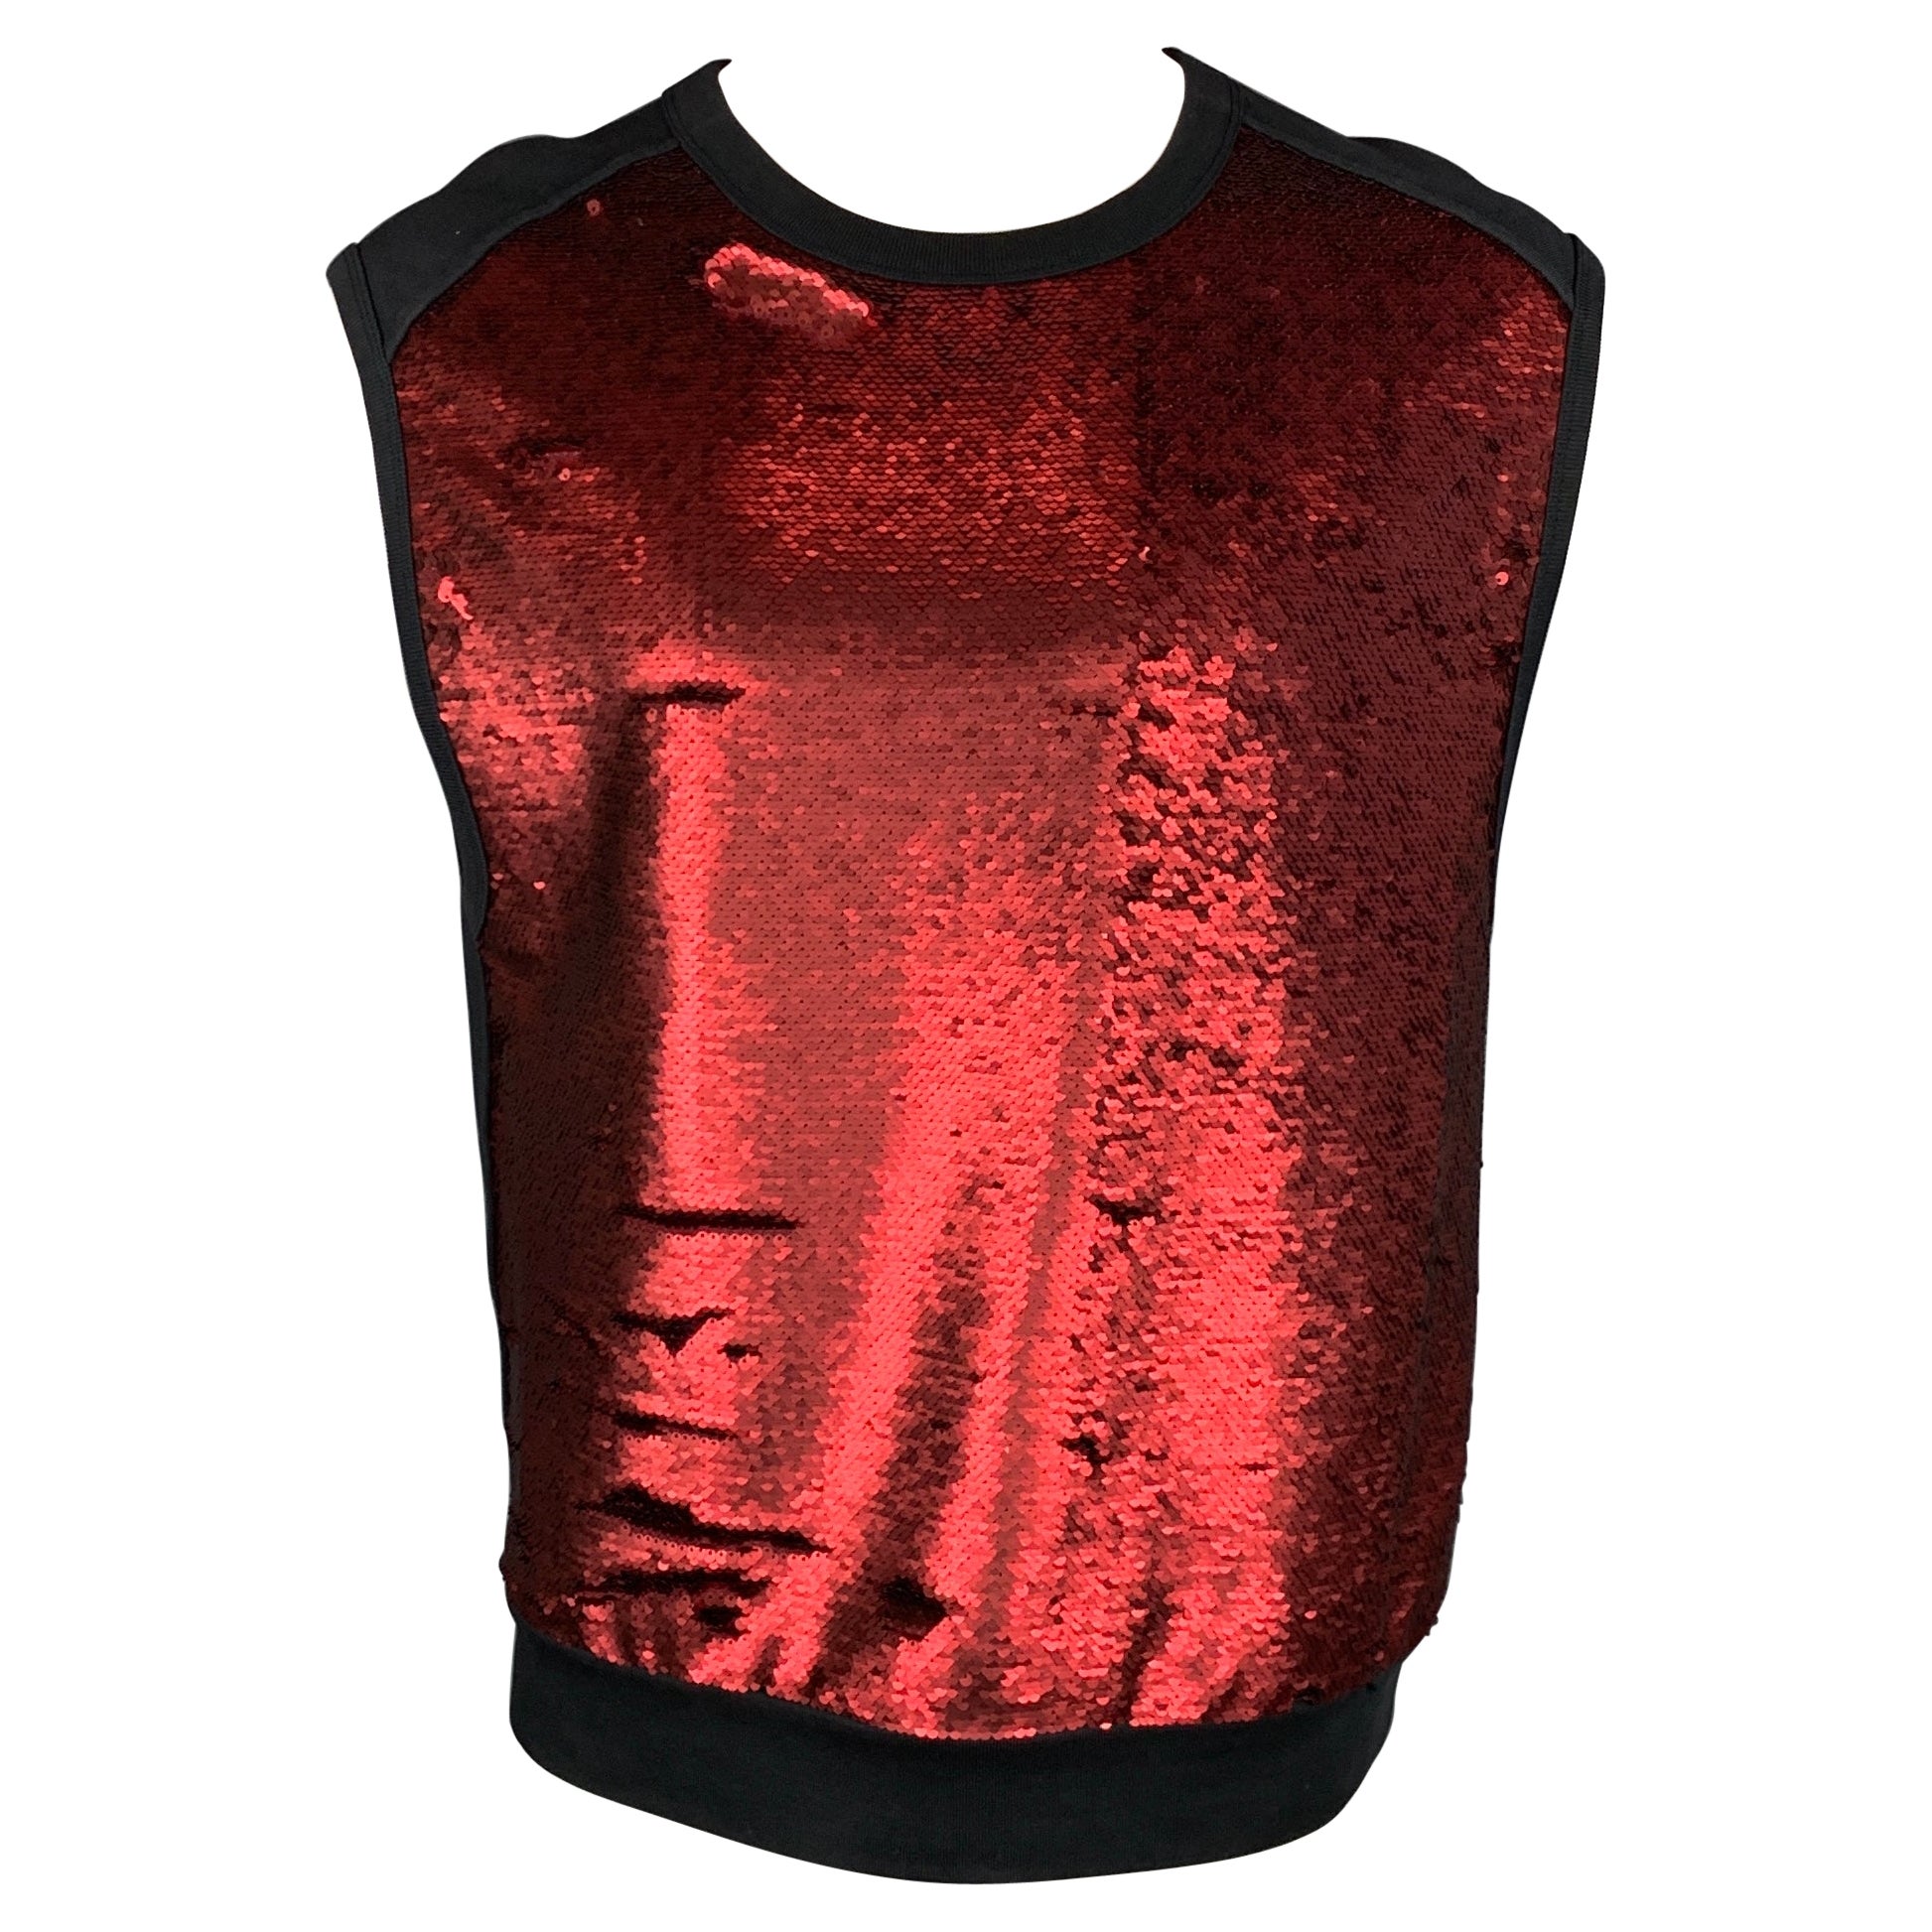 DRIES VAN NOTEN S/S 16 Size M Red & Black Sequined Cotton / Polyester Vest